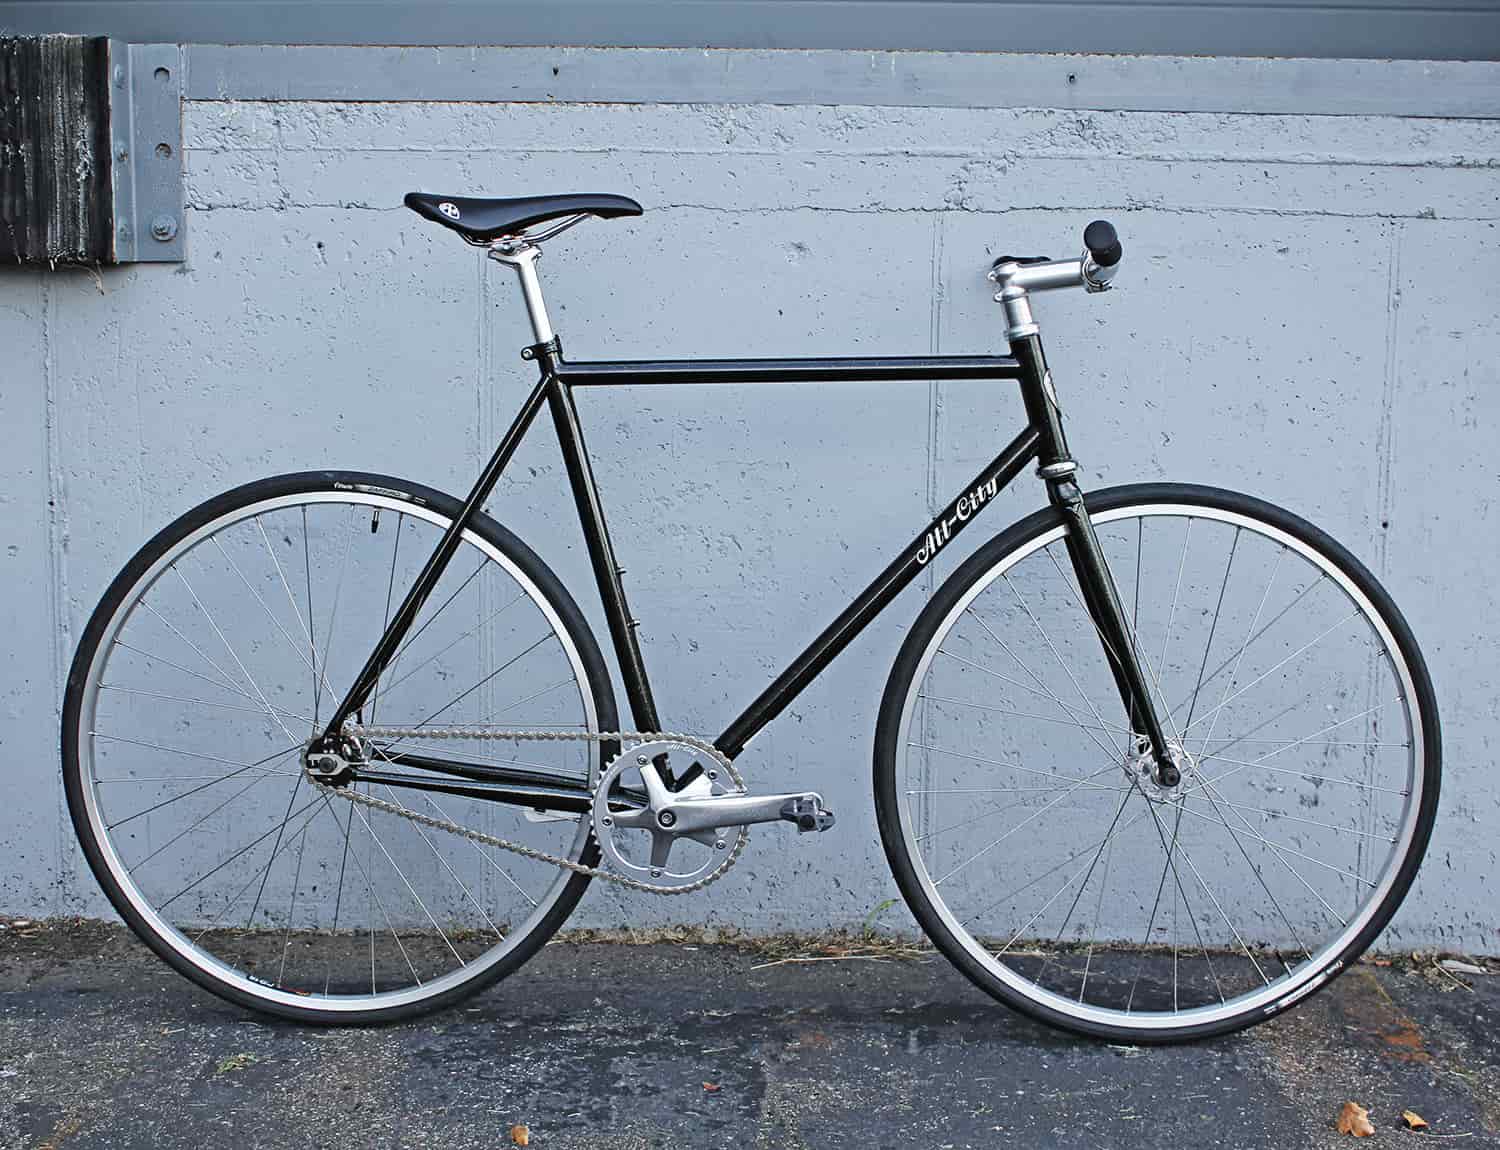 All City Big Block bike against a grey background